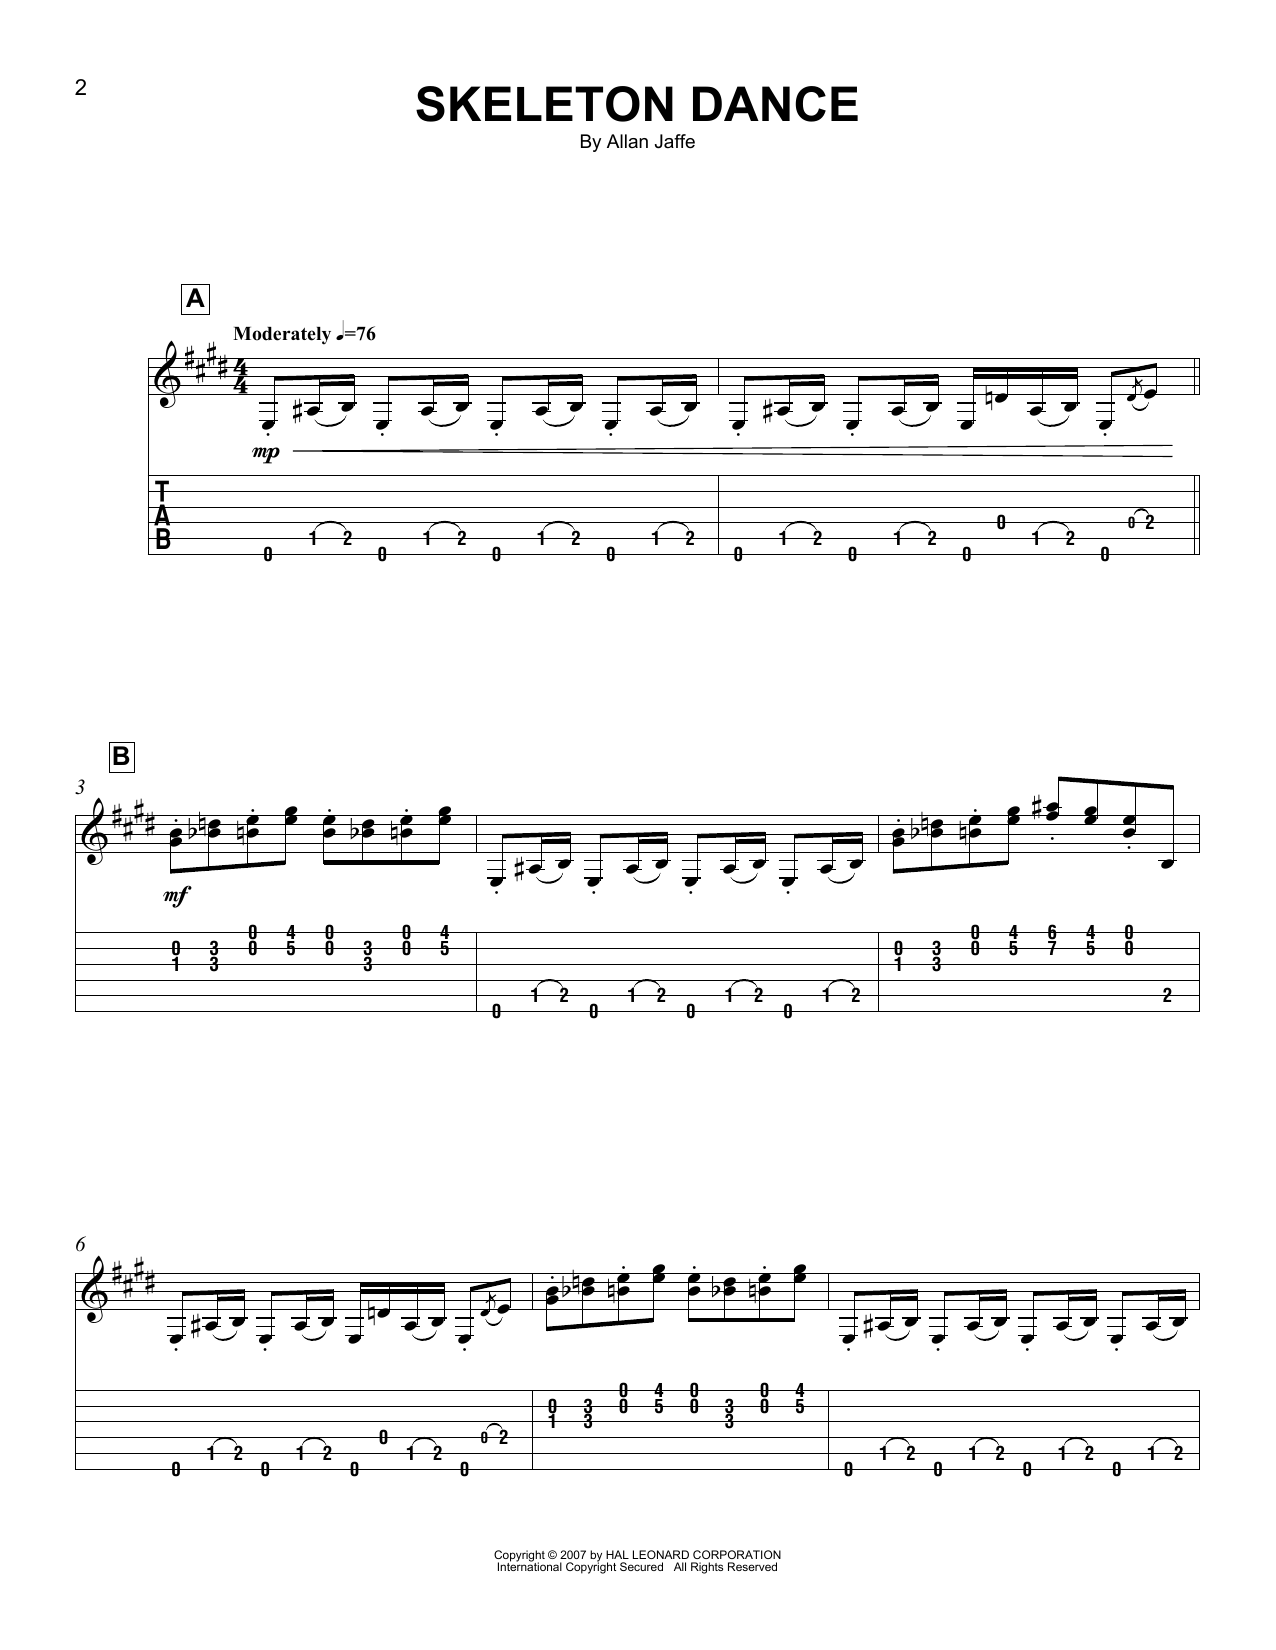 Allan Jaffe Skeleton Dance Sheet Music Notes & Chords for Easy Guitar Tab - Download or Print PDF